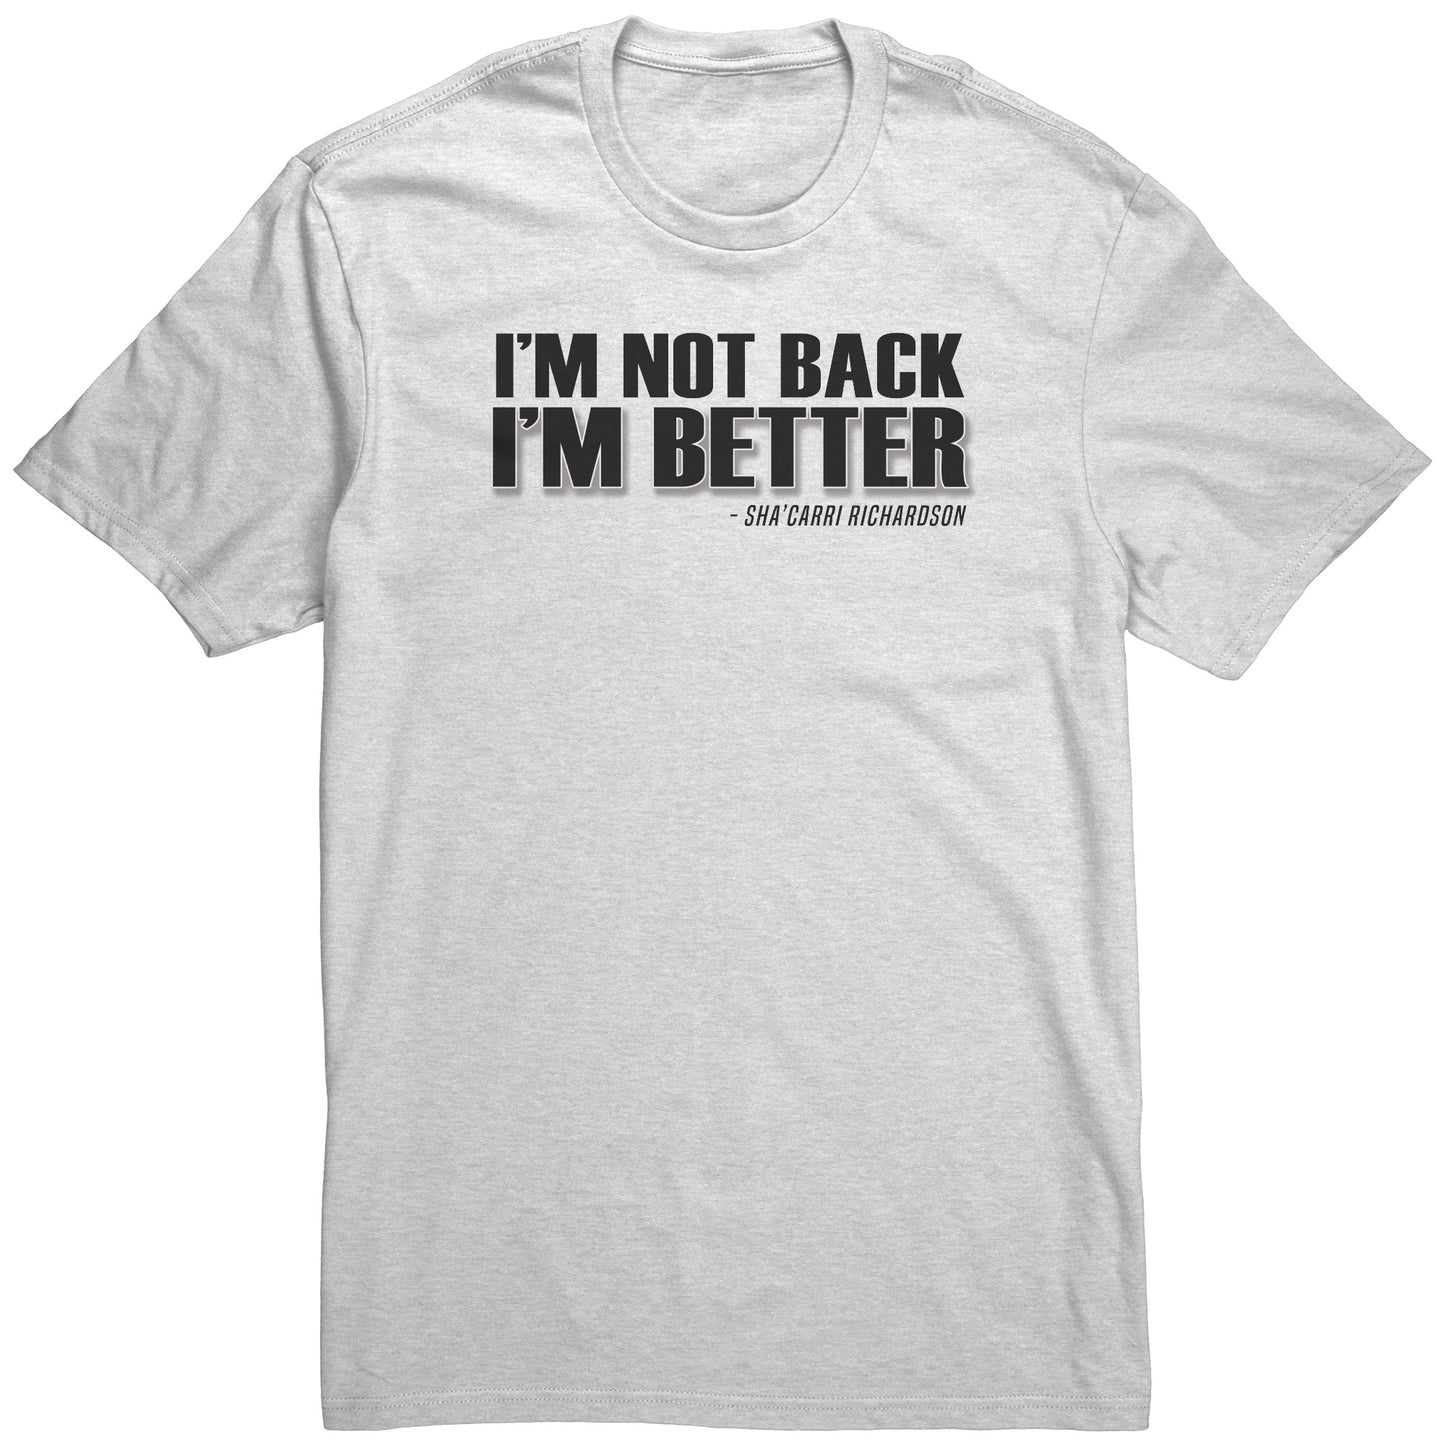 Adult Tee "I'm not back, I'm better" (black print)